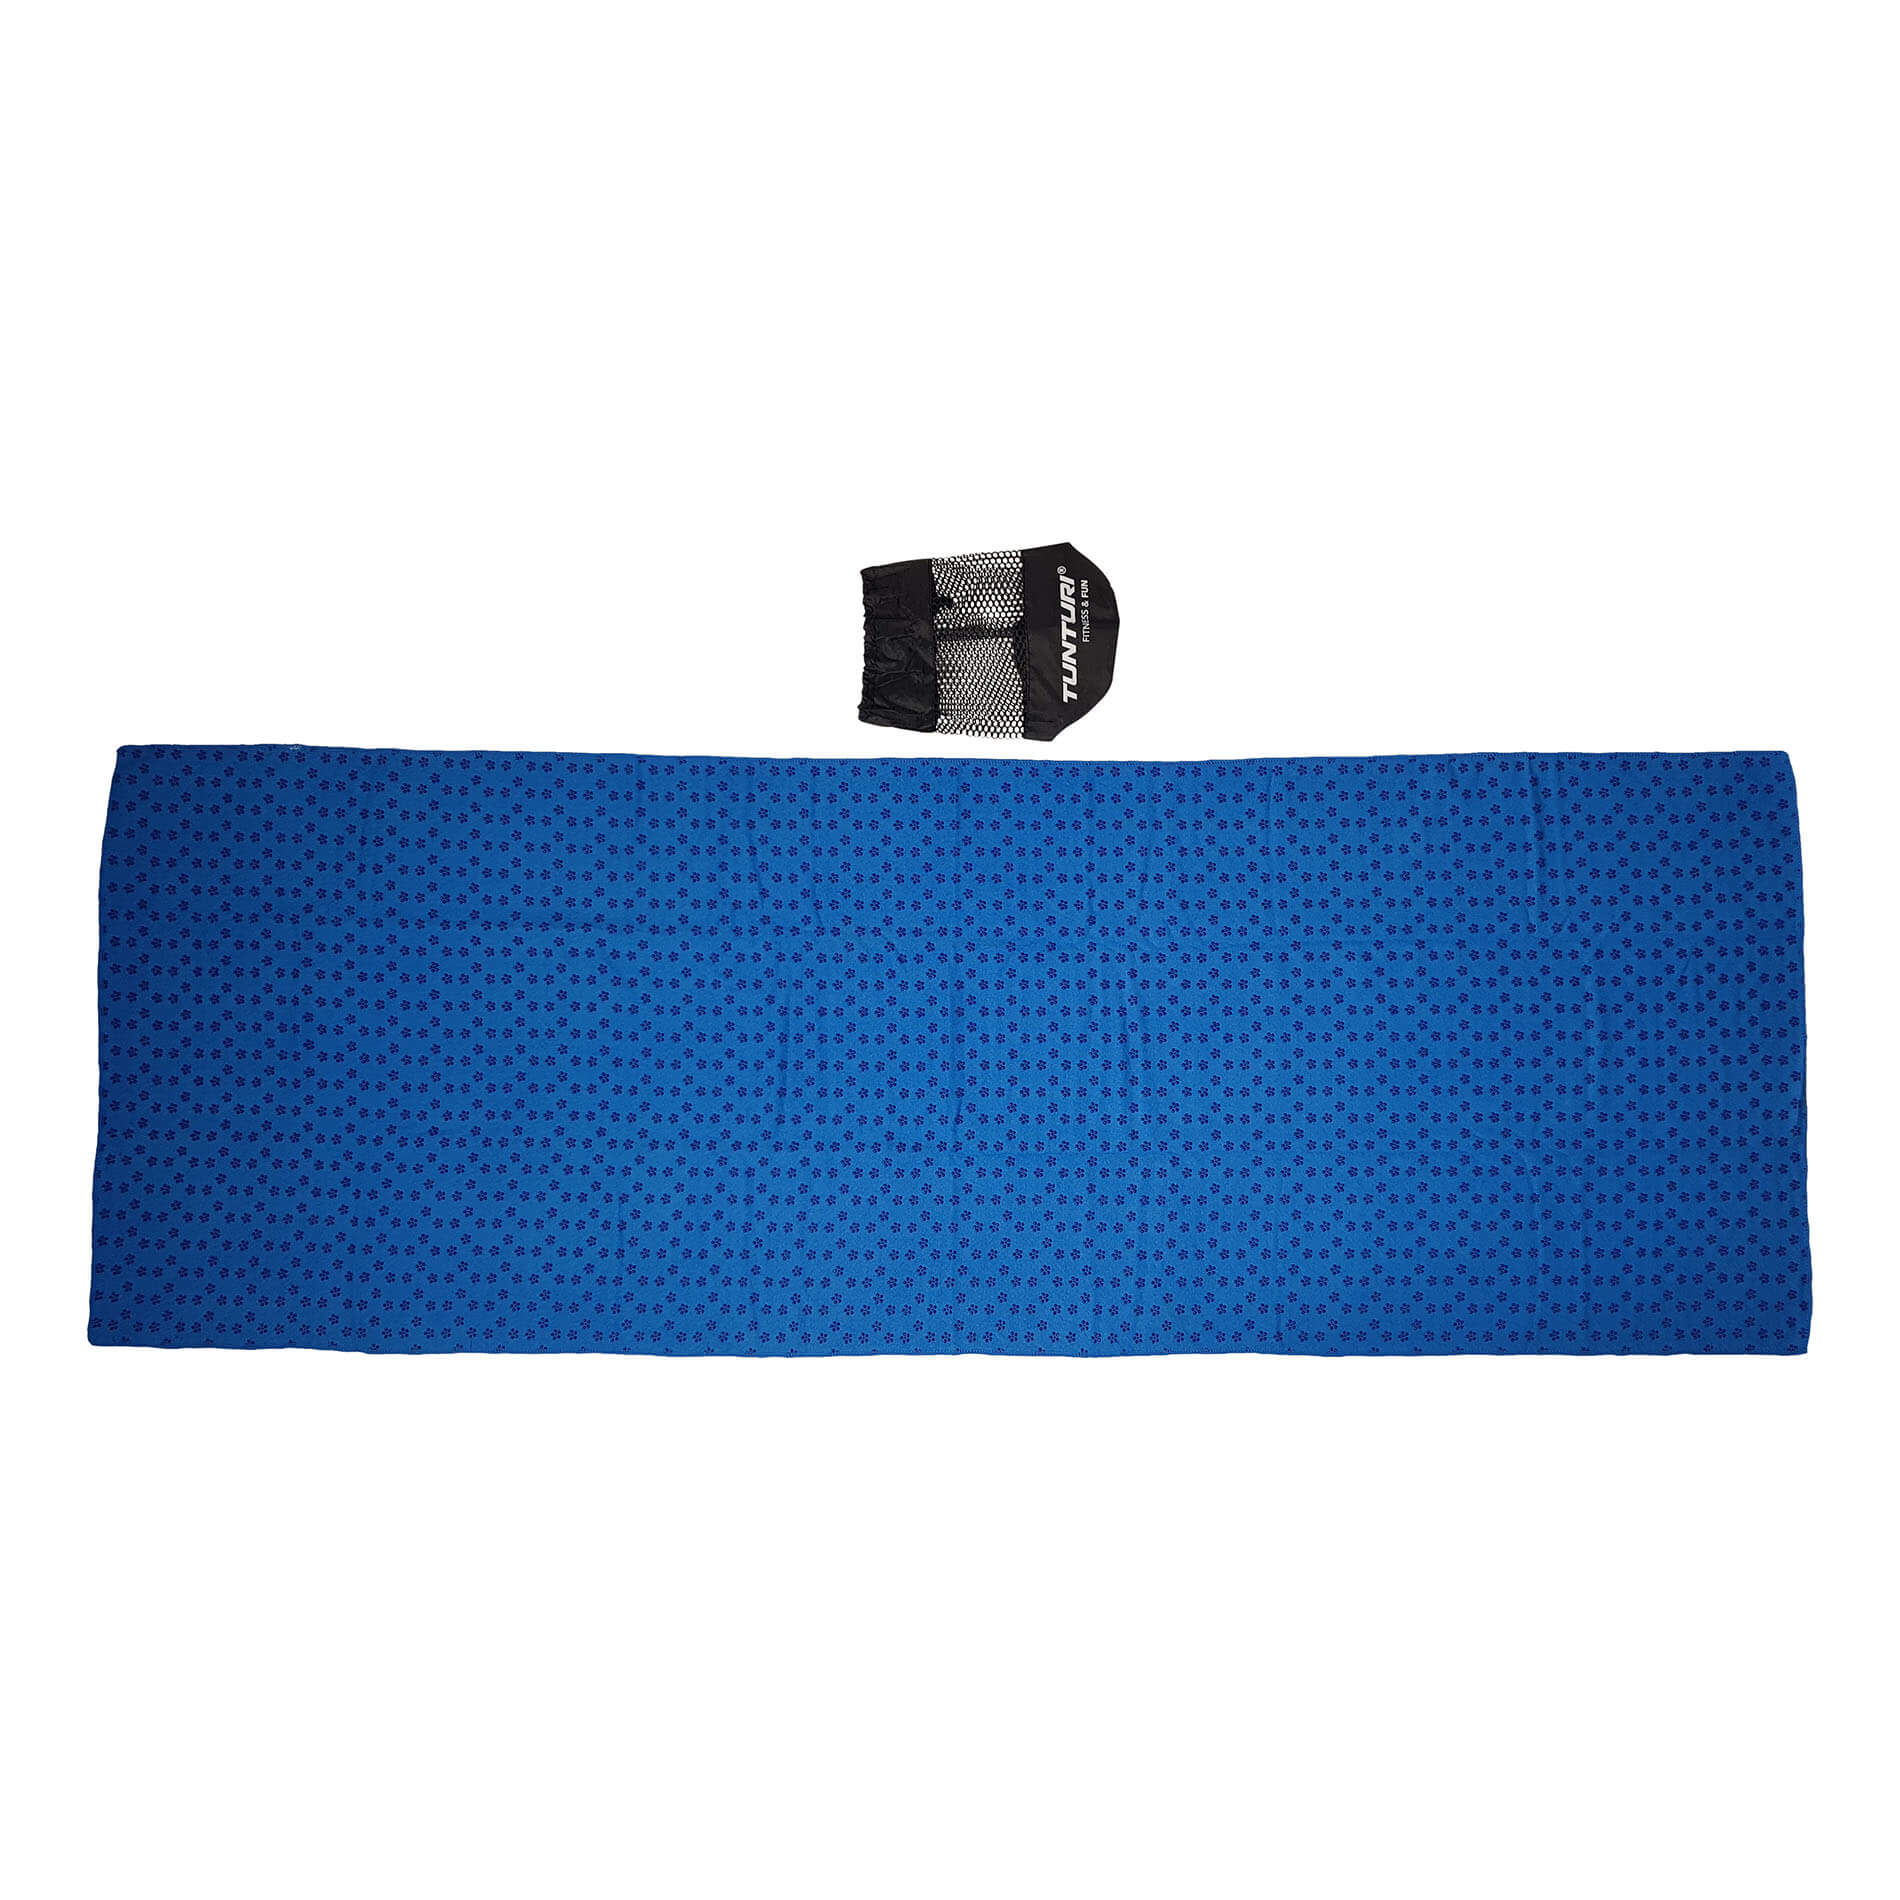 Yoga Towel 180-63 cm With Carry Bag